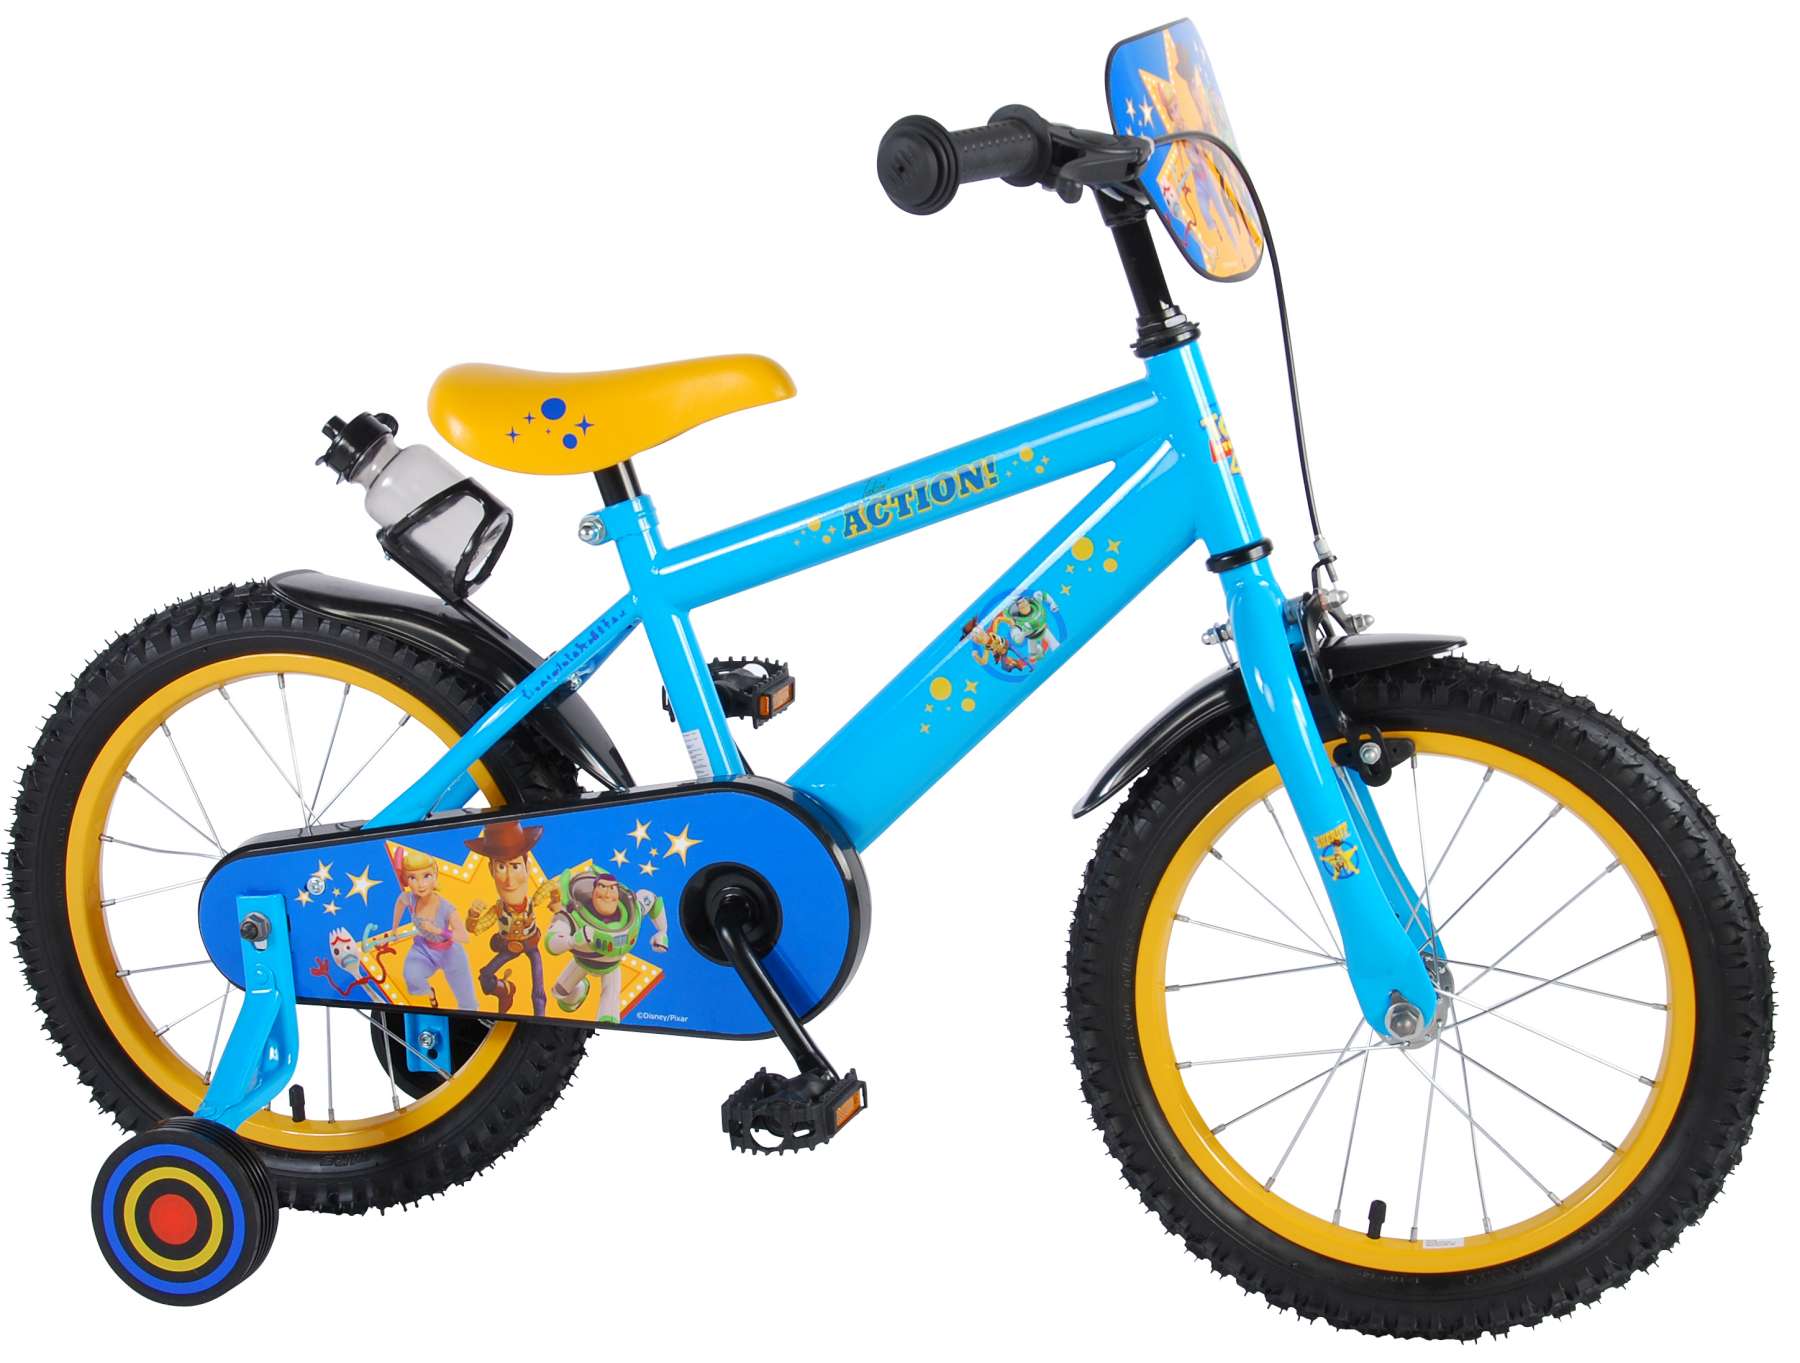 a toy bike